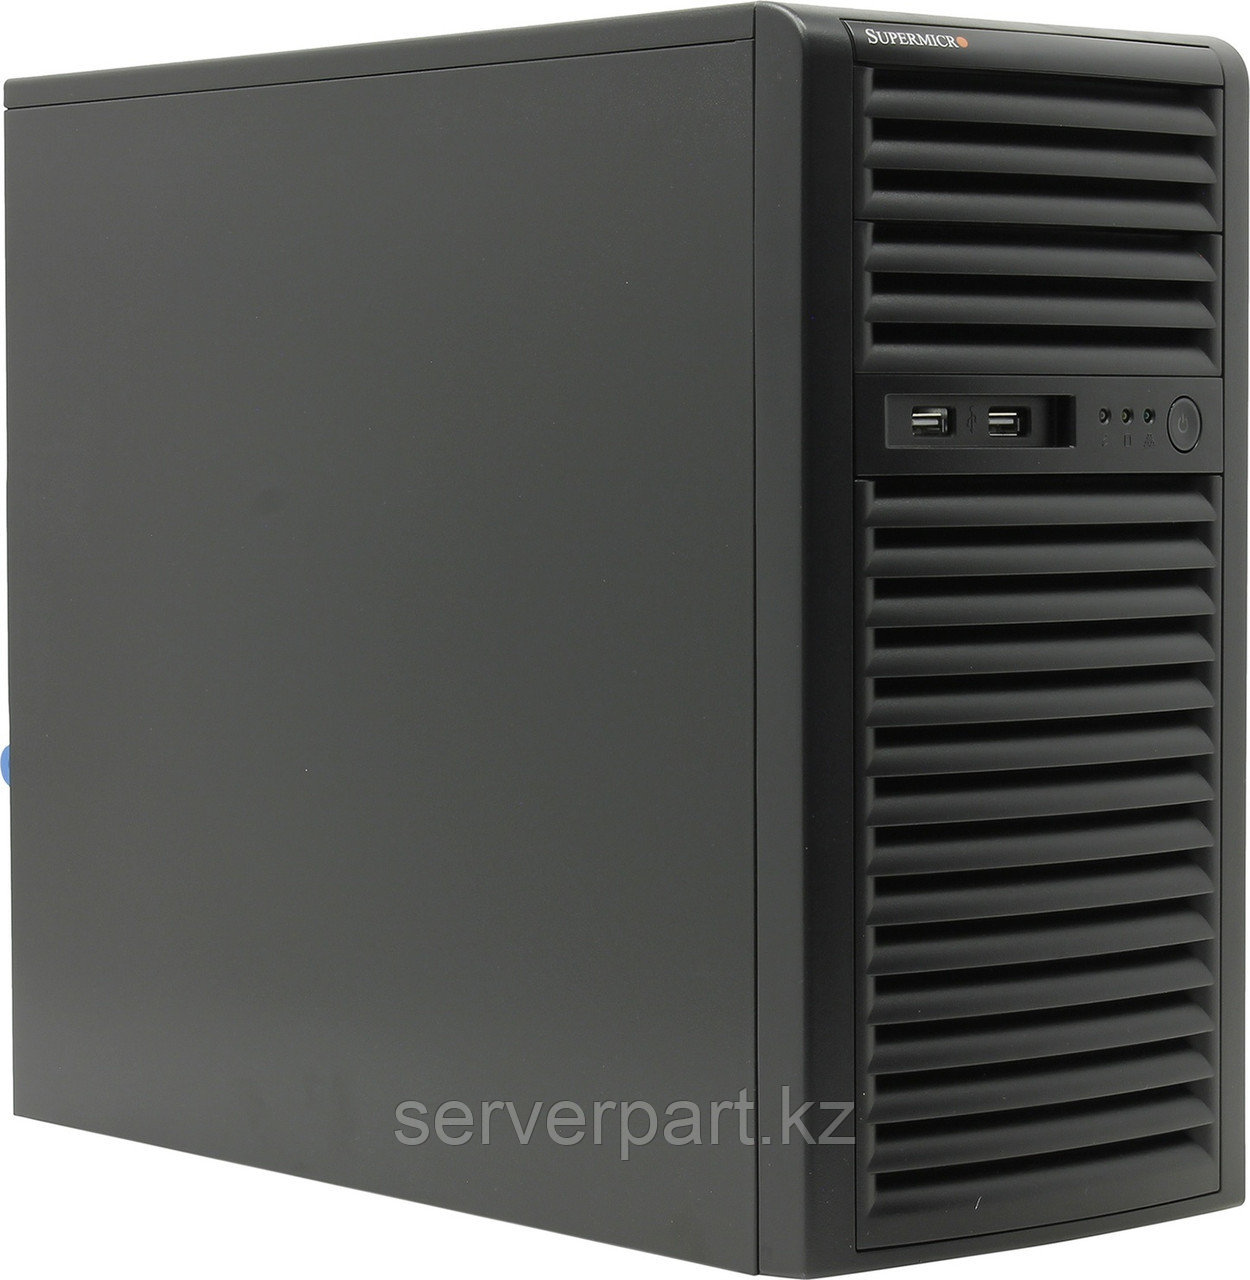 Сервер Supermicro SYS-5039C Tower 4LFF/4-core intel xeon E2124 3.3GHz/32GB EUDIMM/1x240GB SSD MU Hyb, фото 1